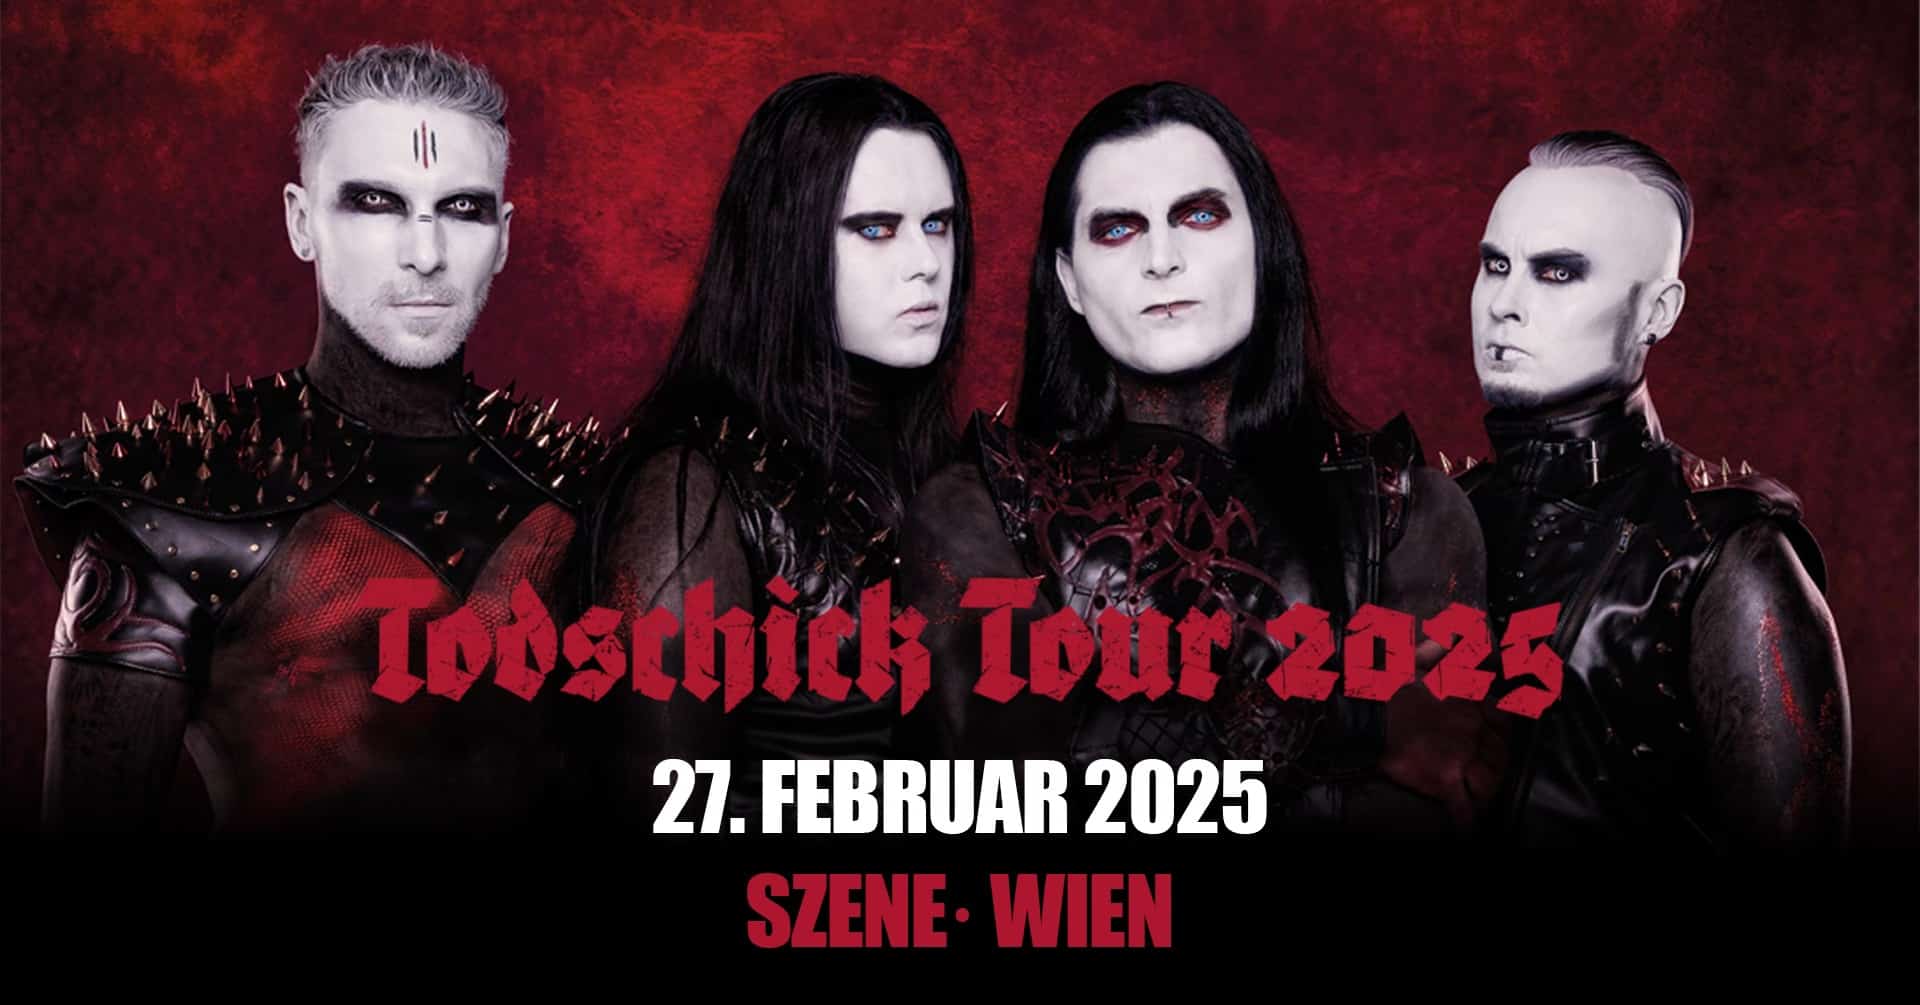 NACHTBLUT - Todschick Tour 2025